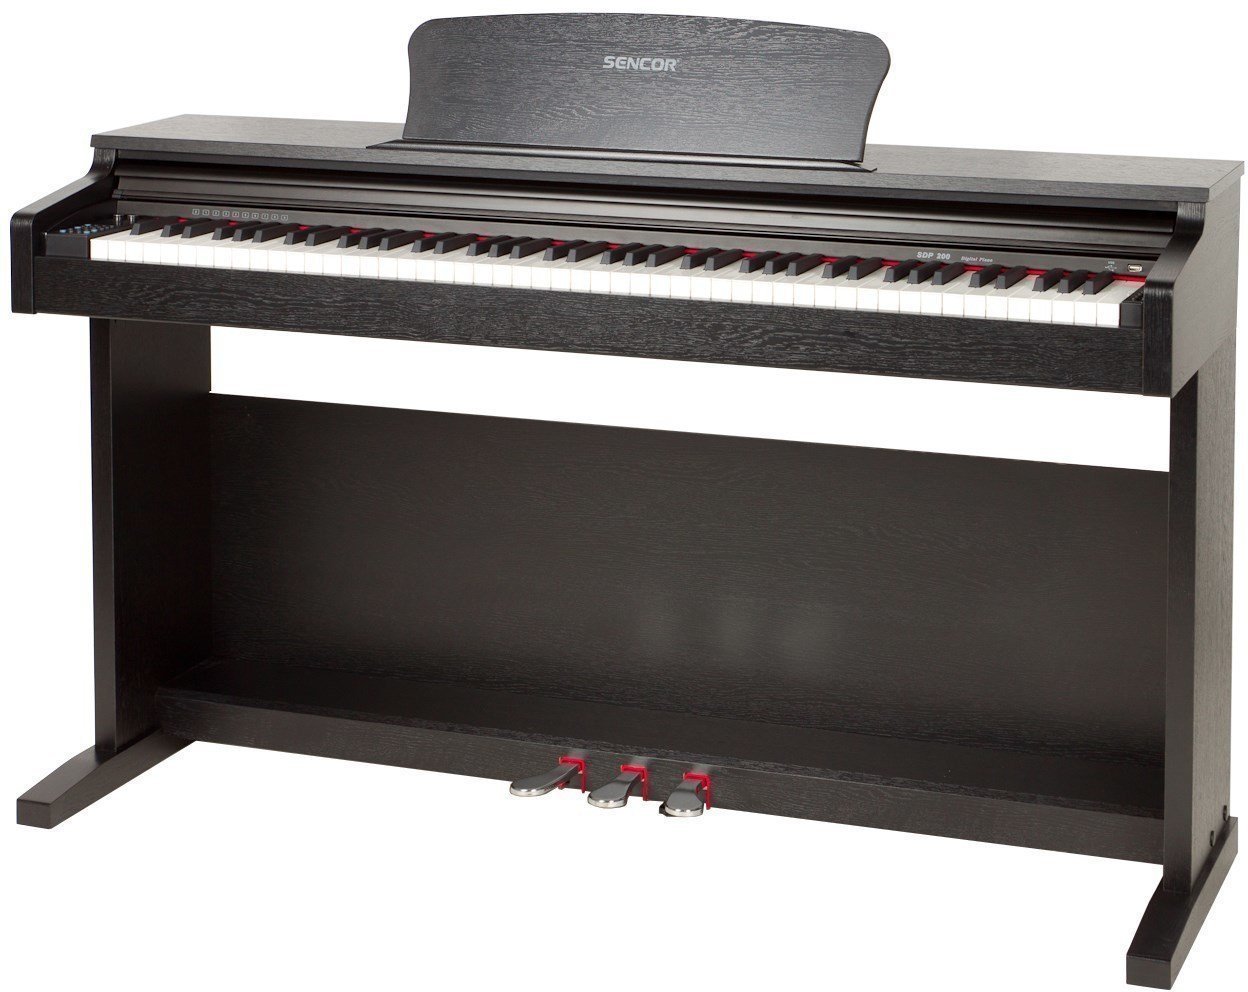 Piano digital SENCOR SDP 200 Black Piano digital